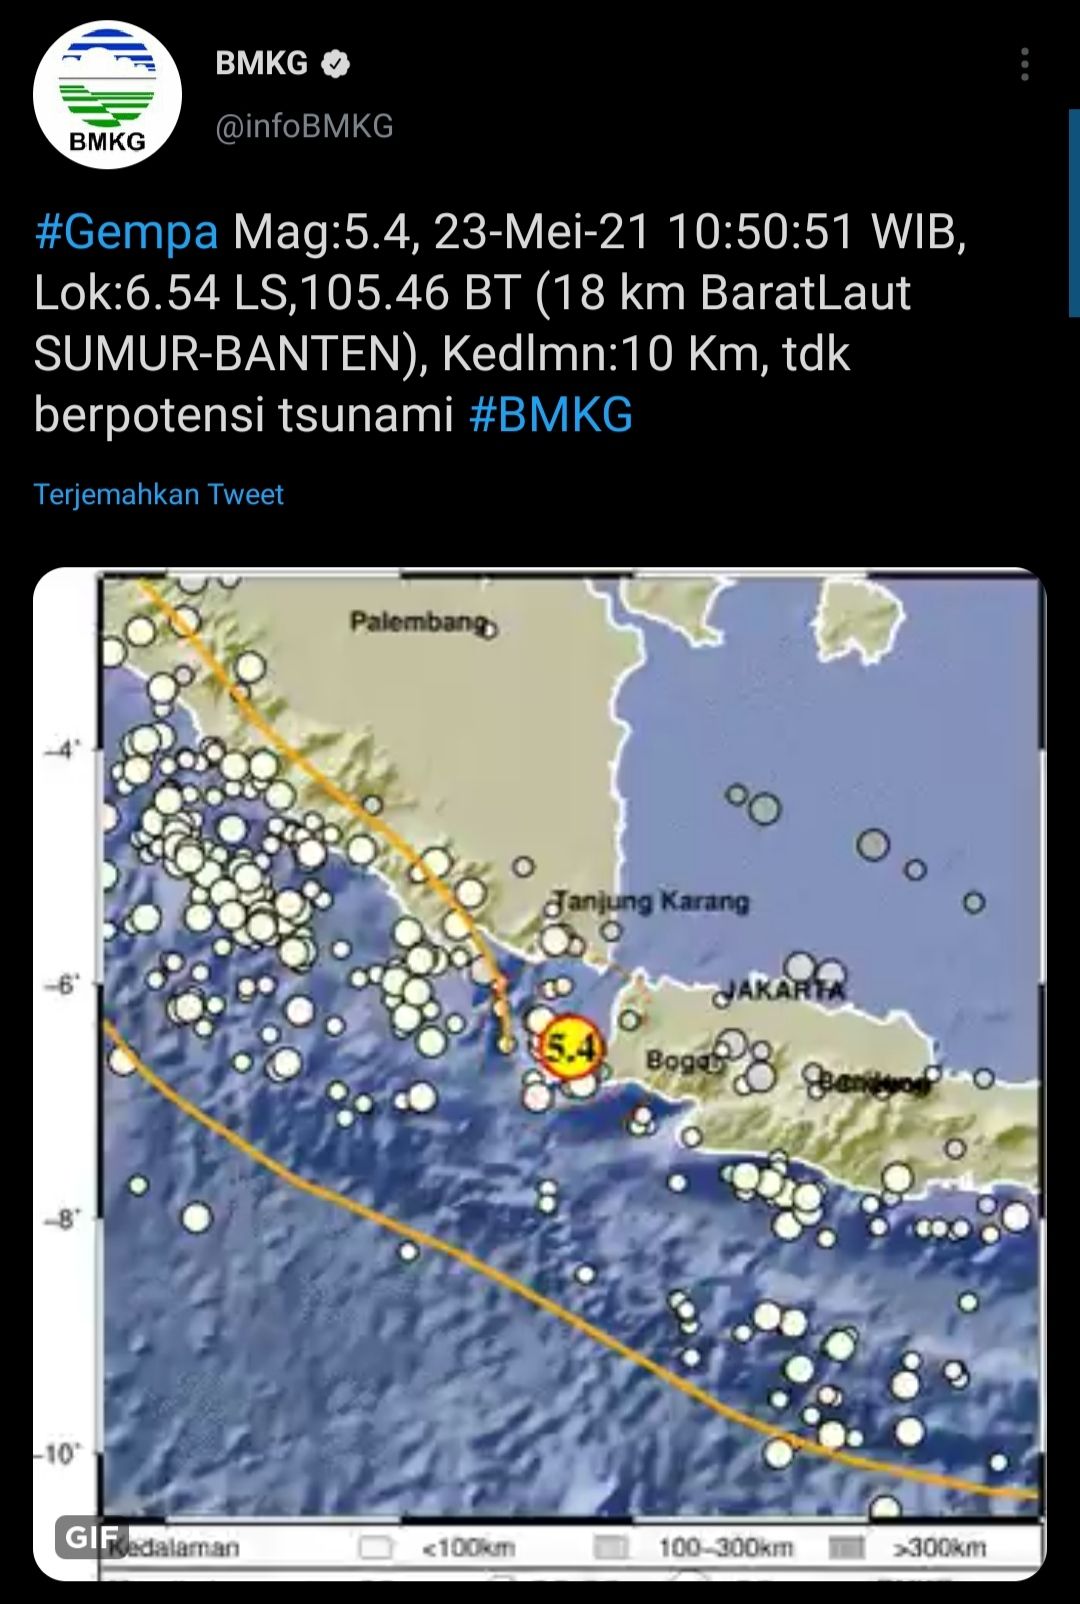 Cuitan BMKG yang mengabarkan terjadinya gempa bumi di Sumur Banten pada Minggu, 23 Mei 2021 pukul 10.50 WIB.